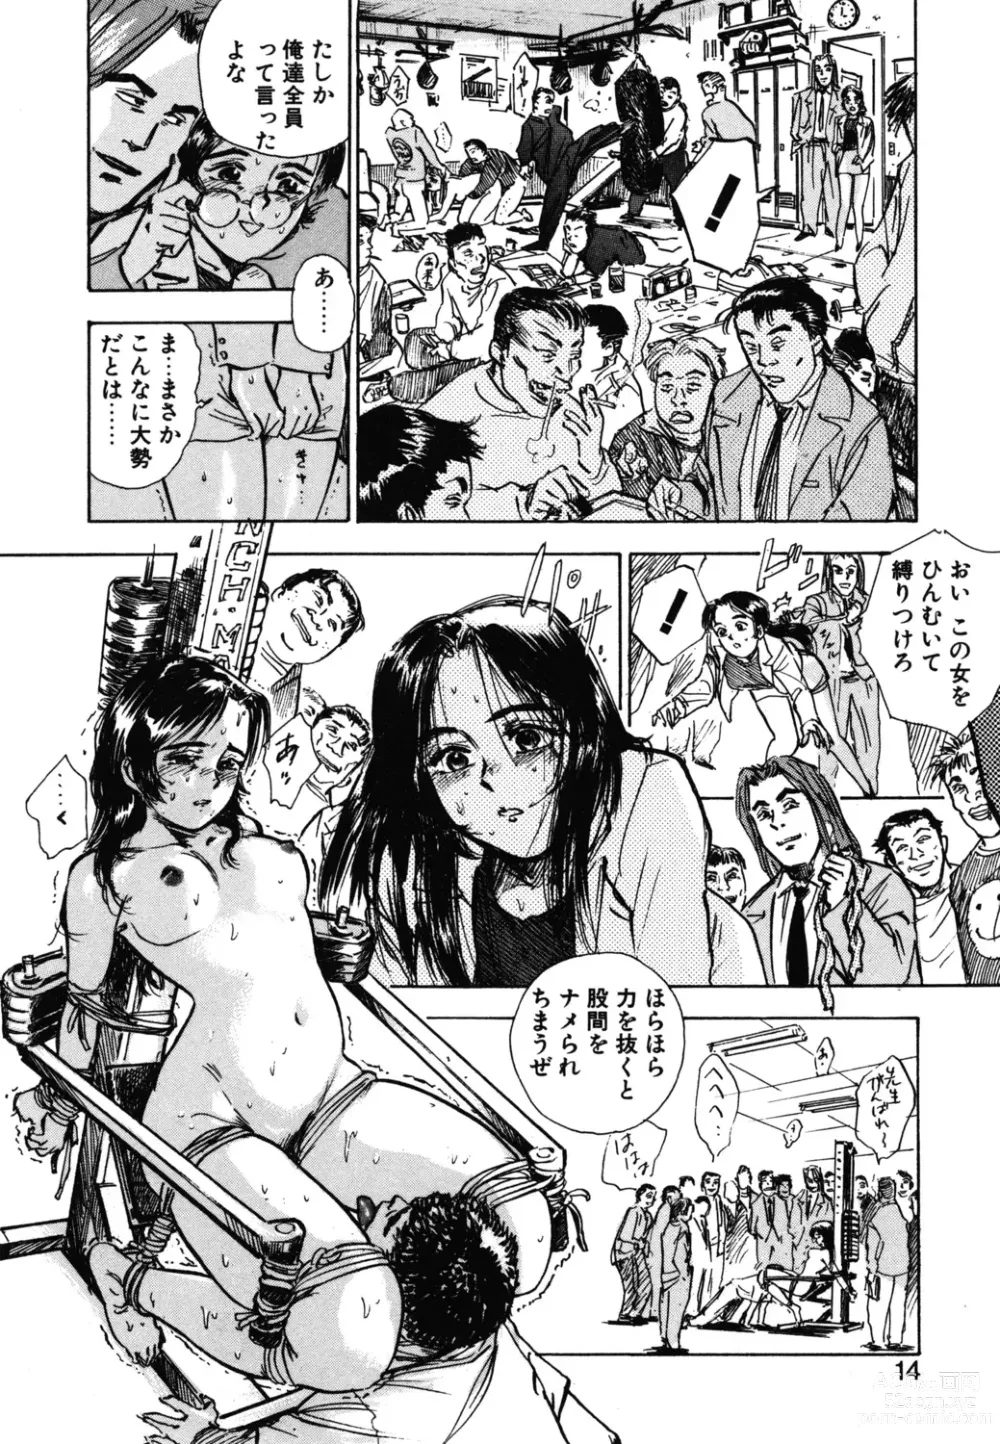 Page 12 of manga Abunai Reiko Sensei 1